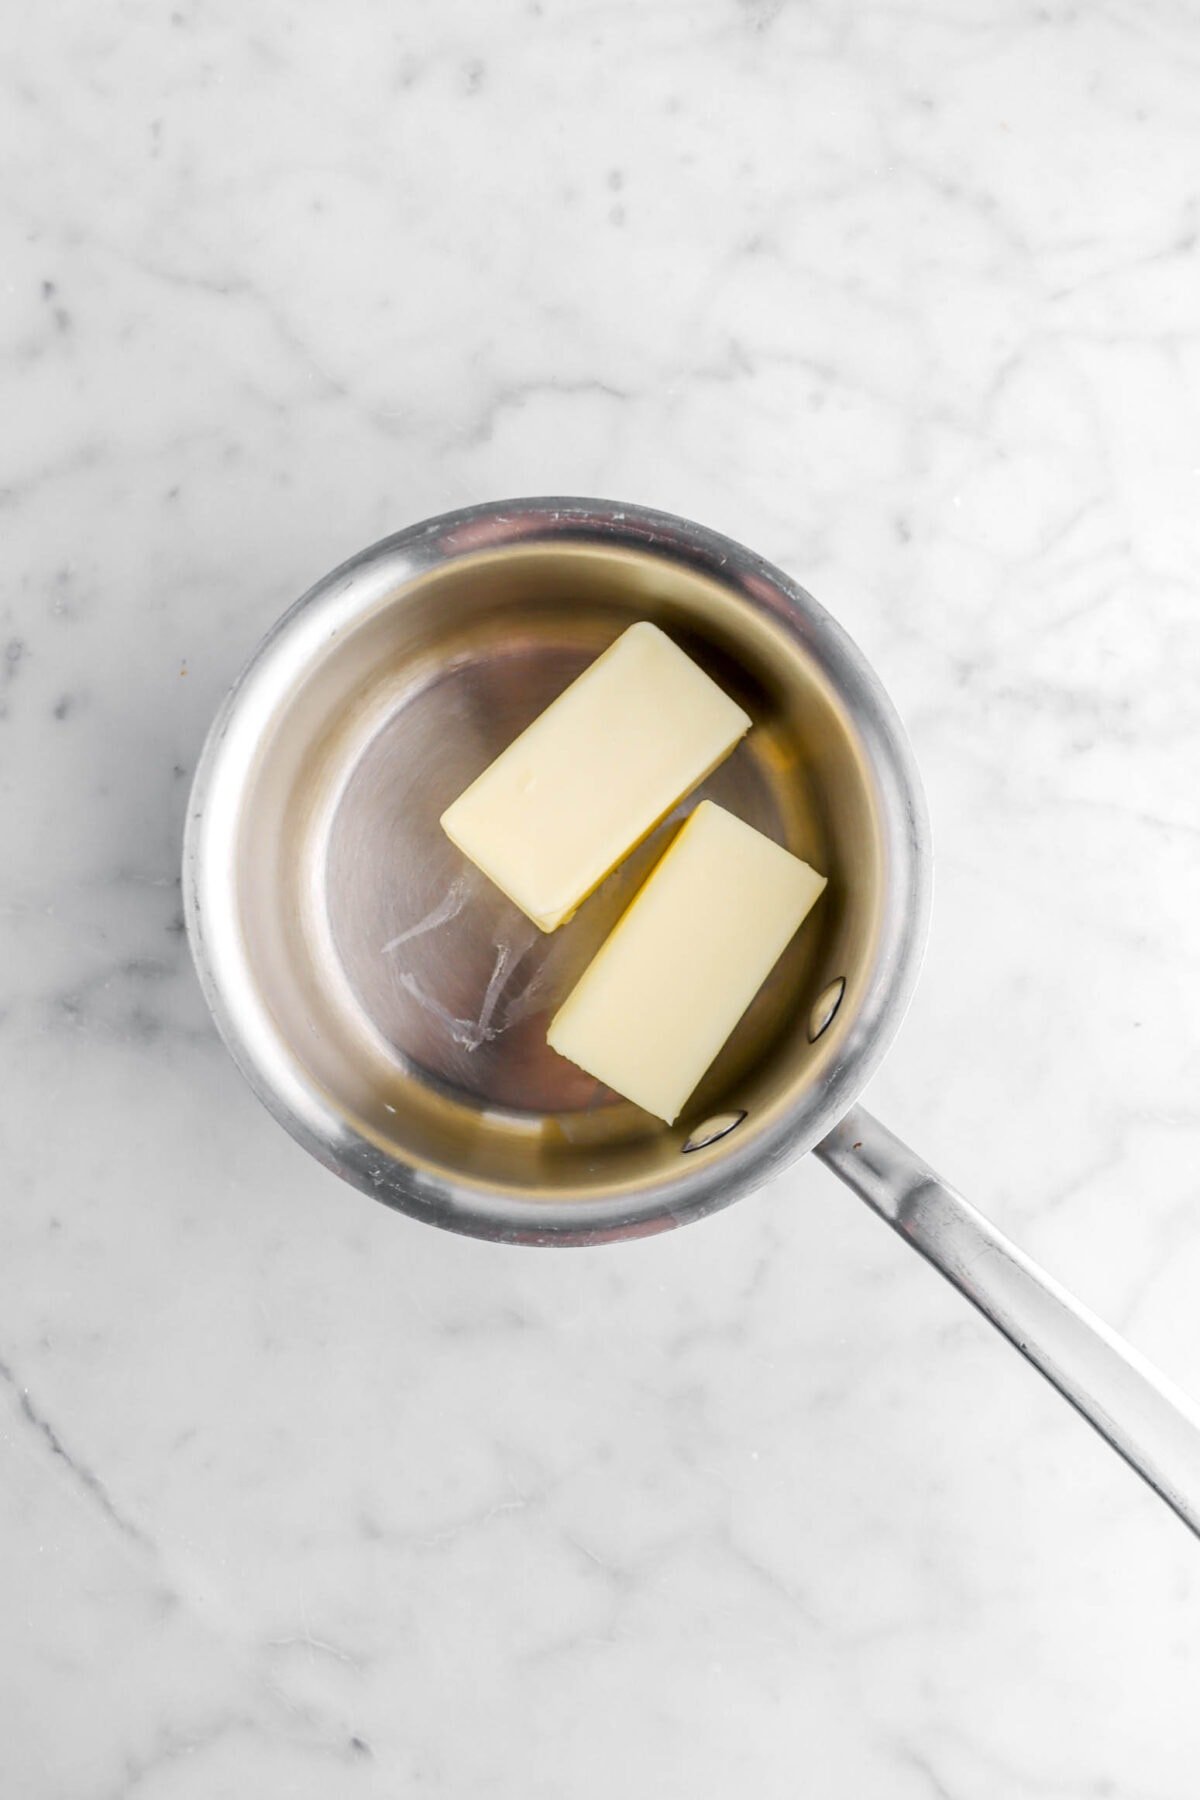 butter in small saucepan.